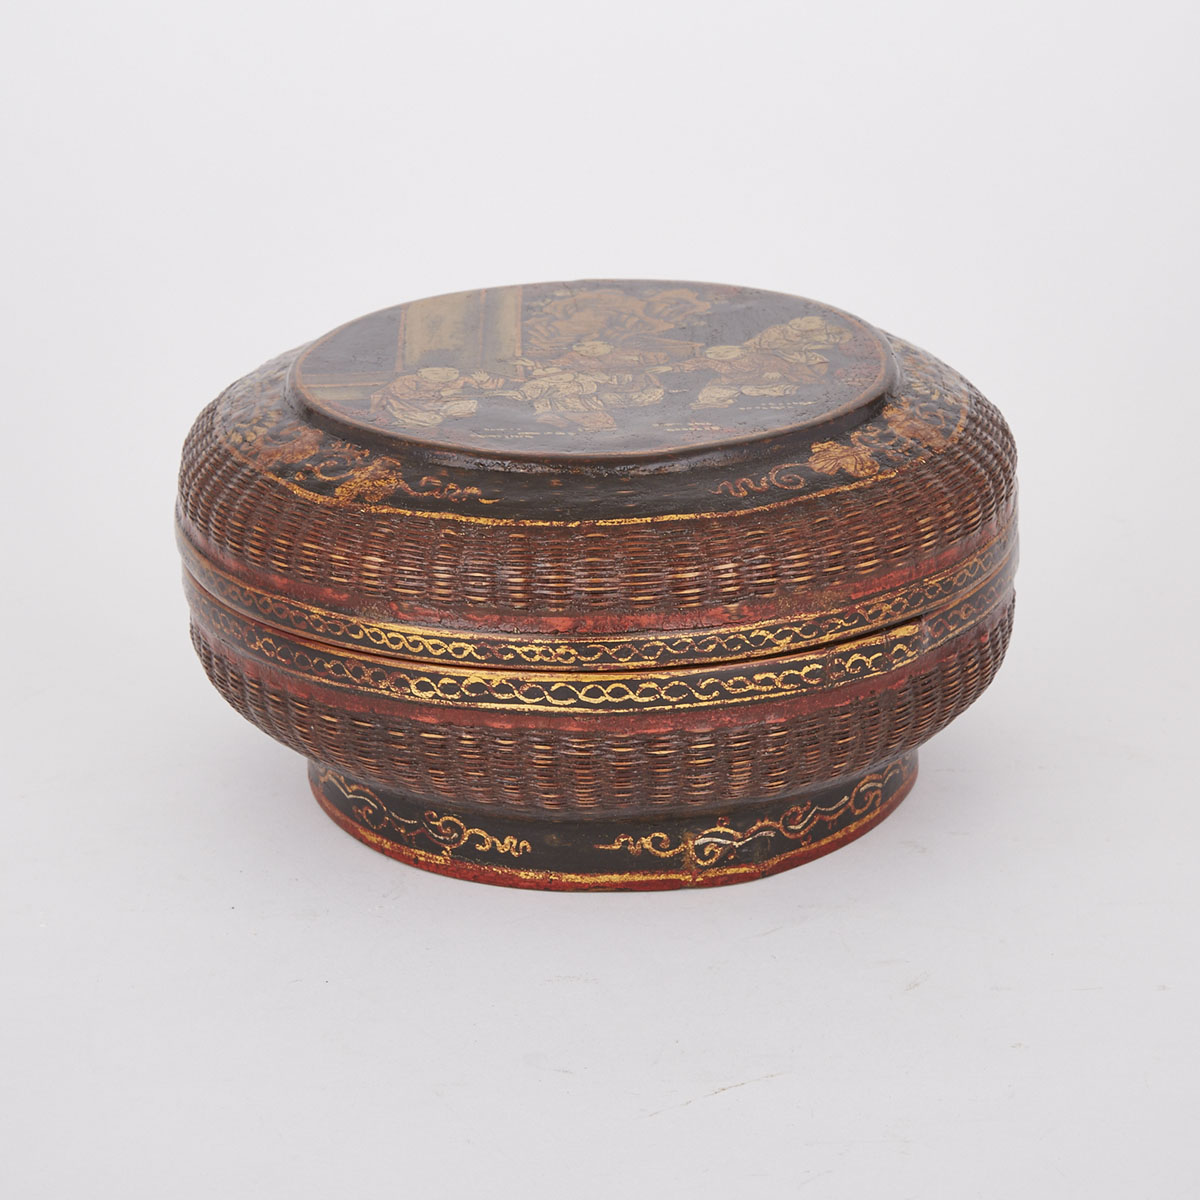 Circular Lacquer Box, Early 20th Century